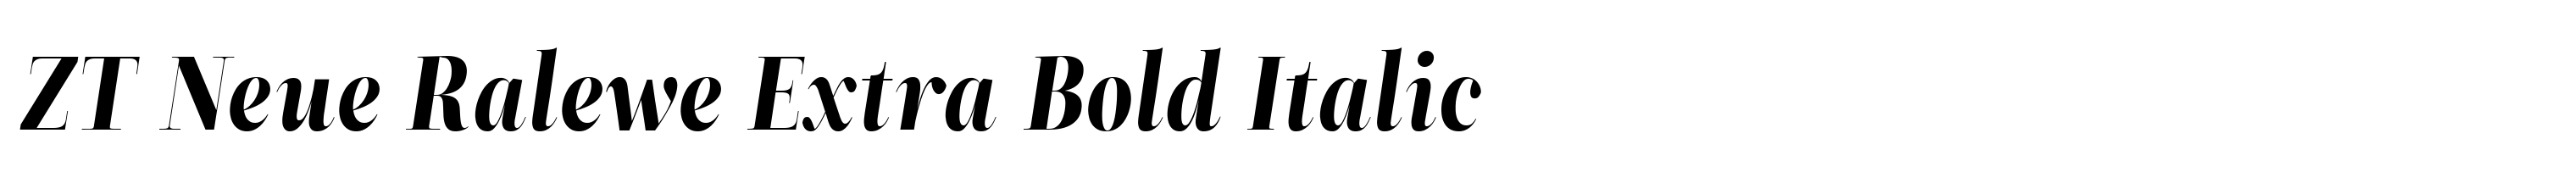 ZT Neue Ralewe Extra Bold Italic